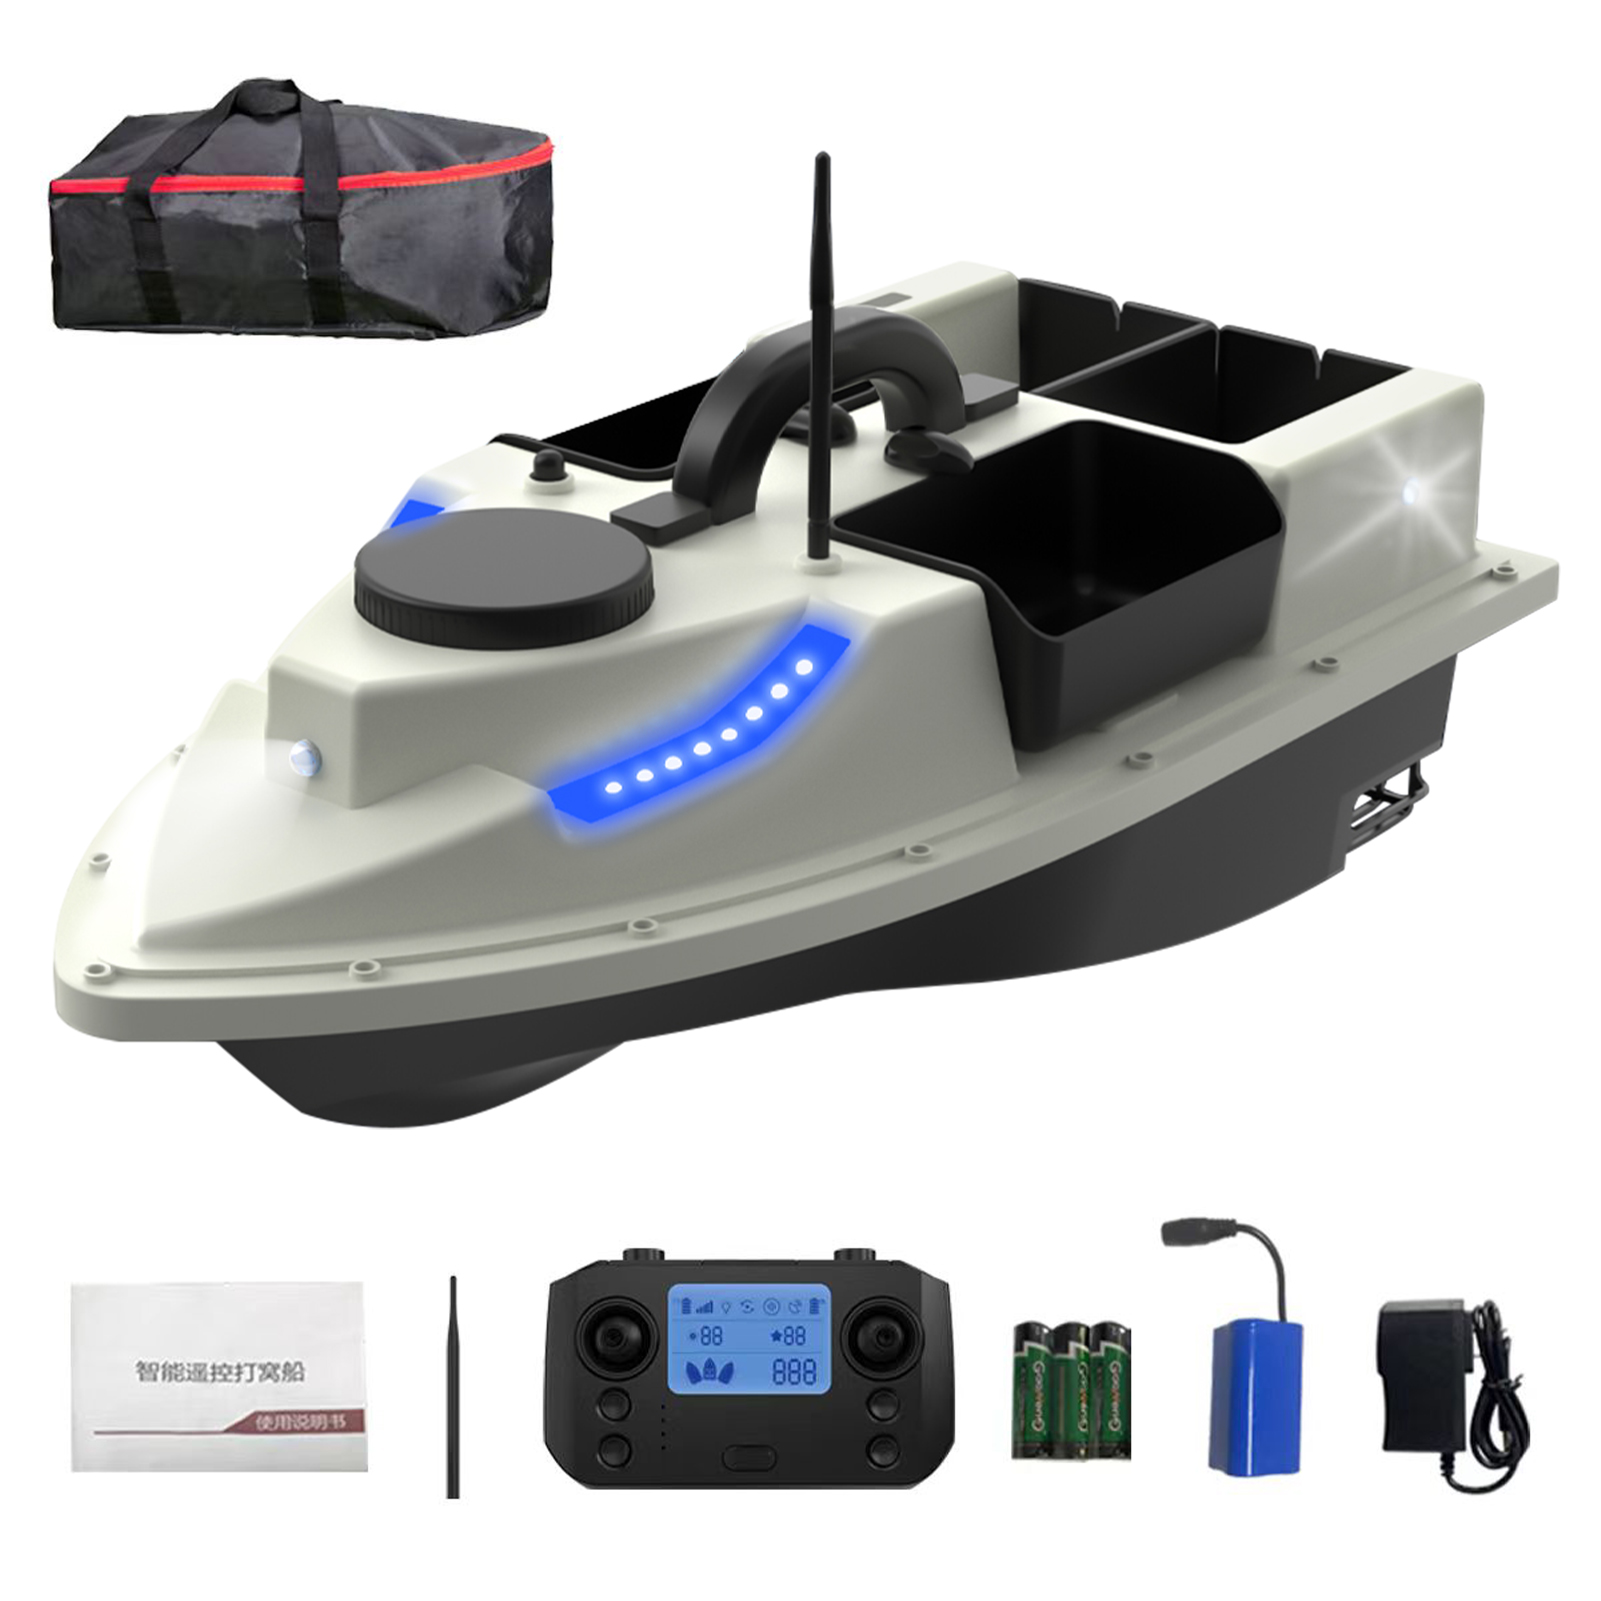 Barco cebador de pesca con GPS - Joysway , barco cebador 